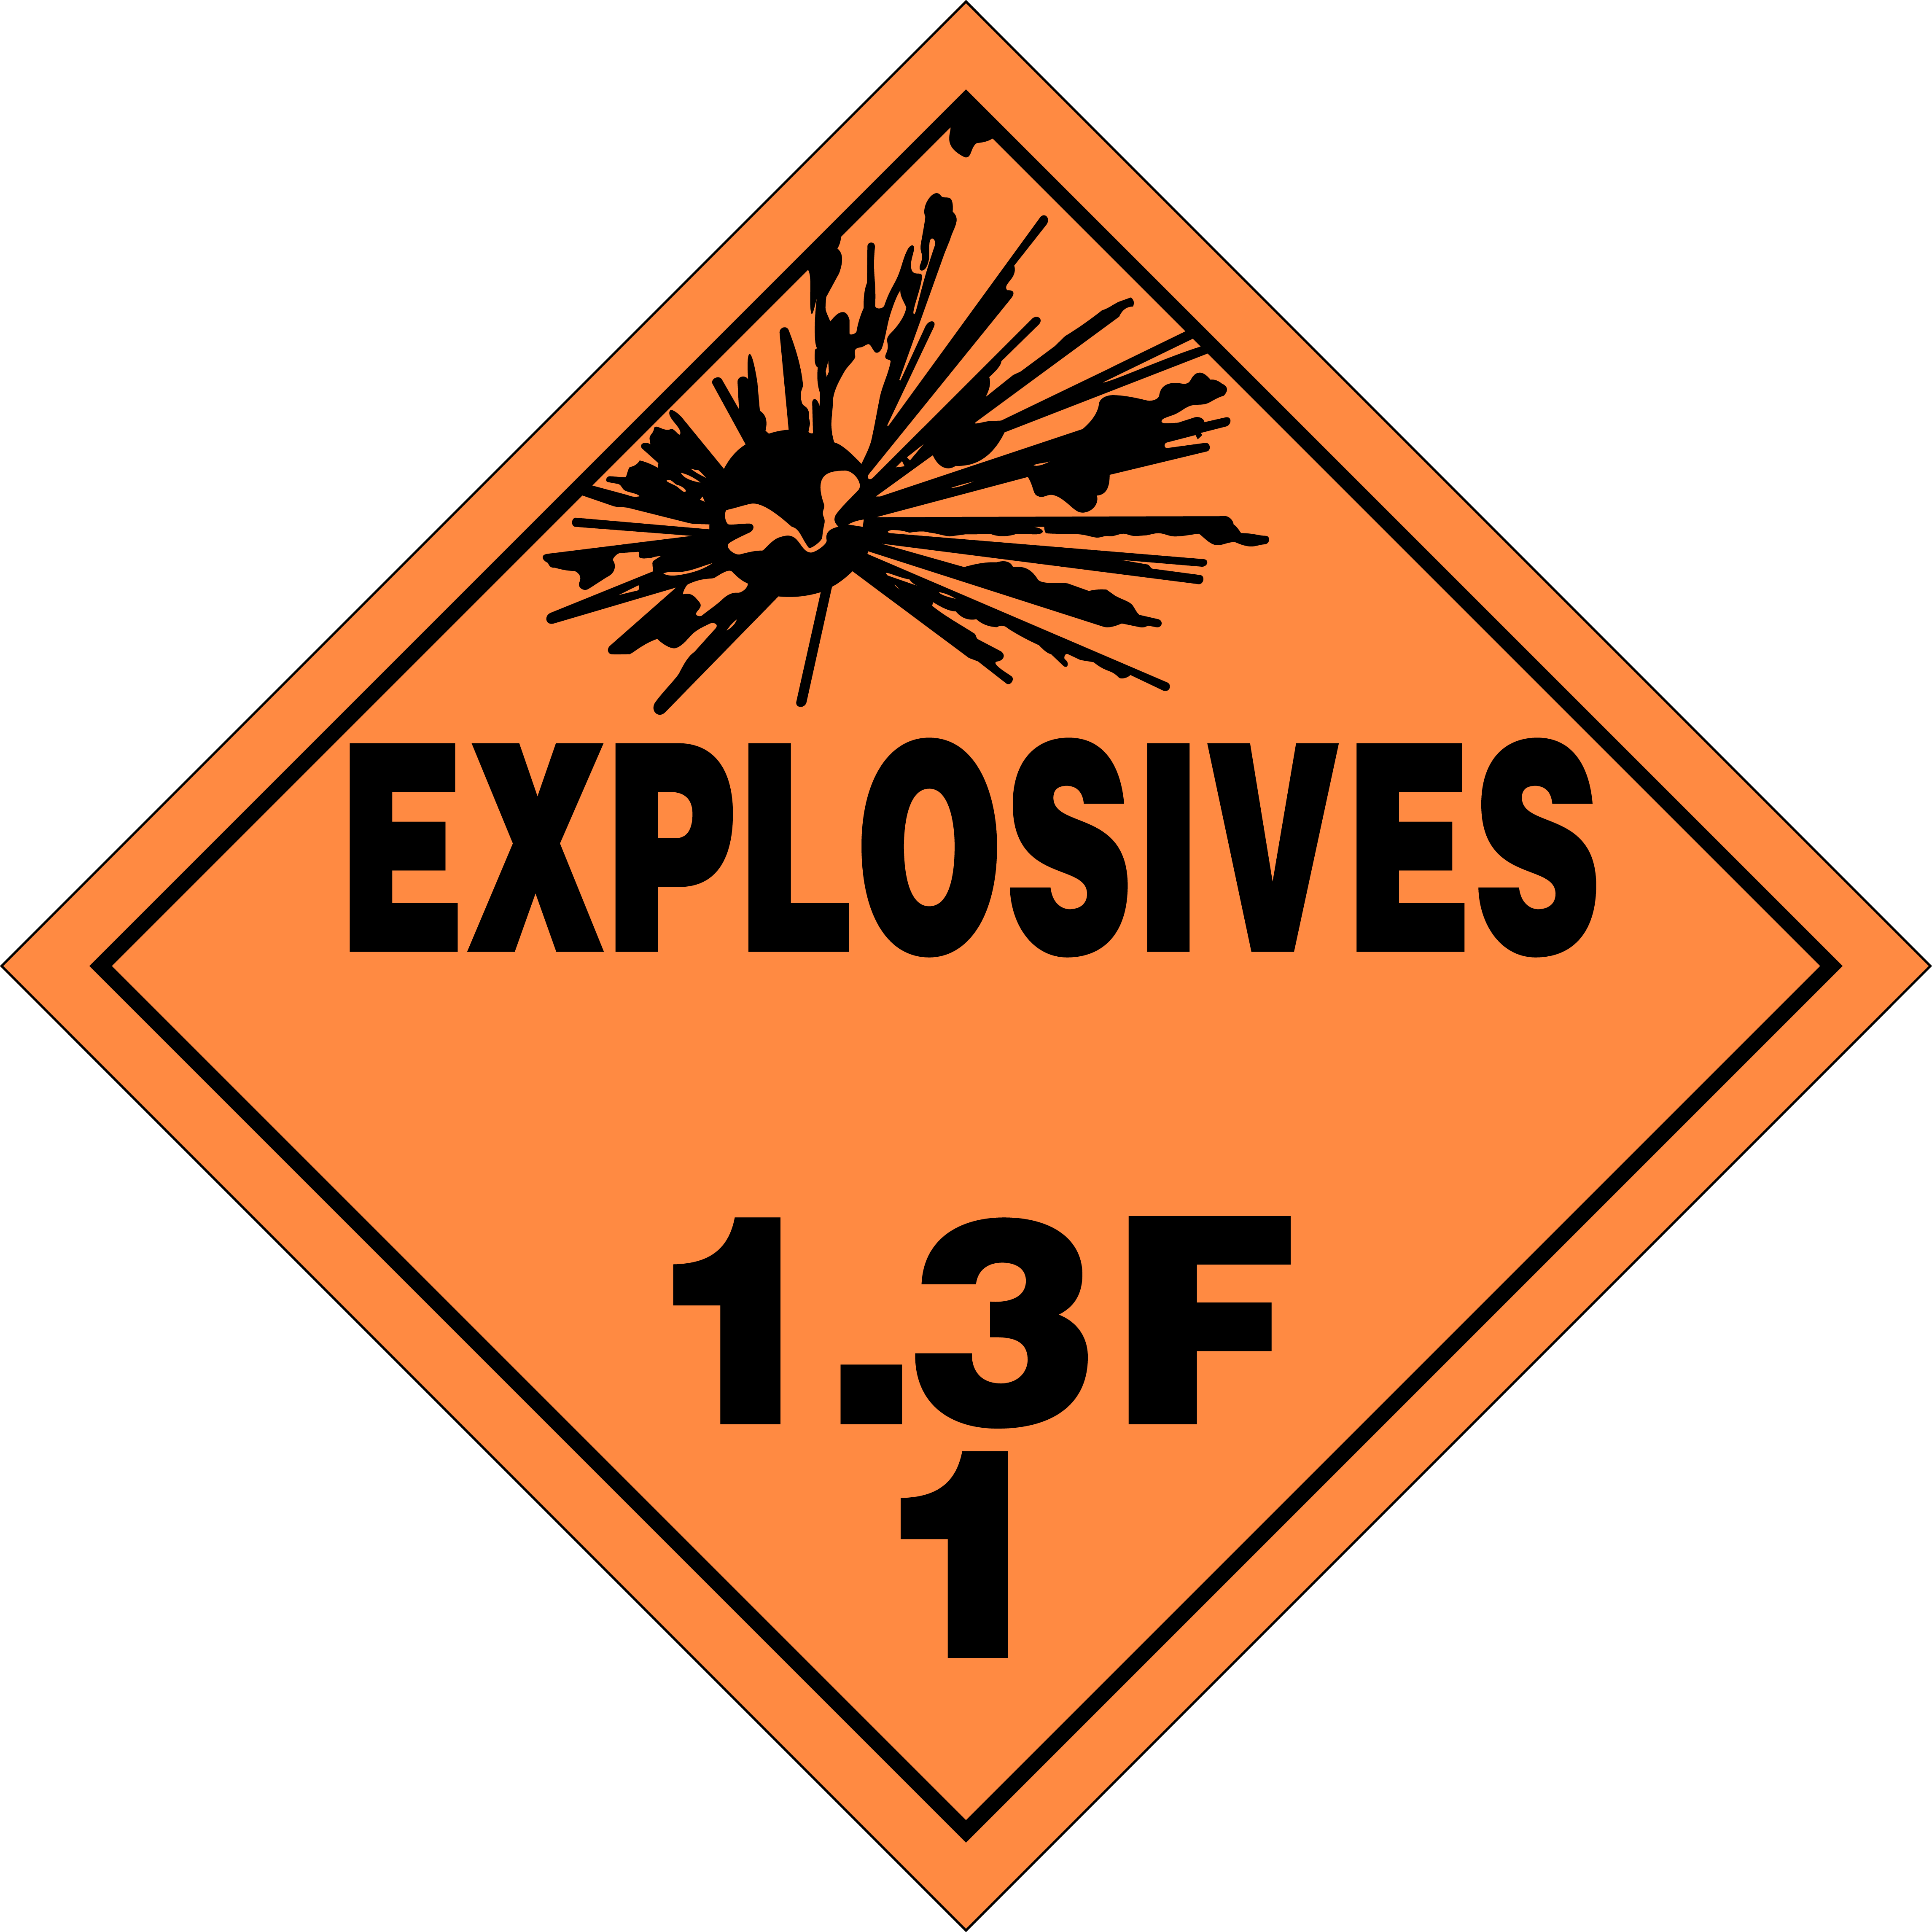 3 C - 1.4 Explosives Placard (4582x4582)